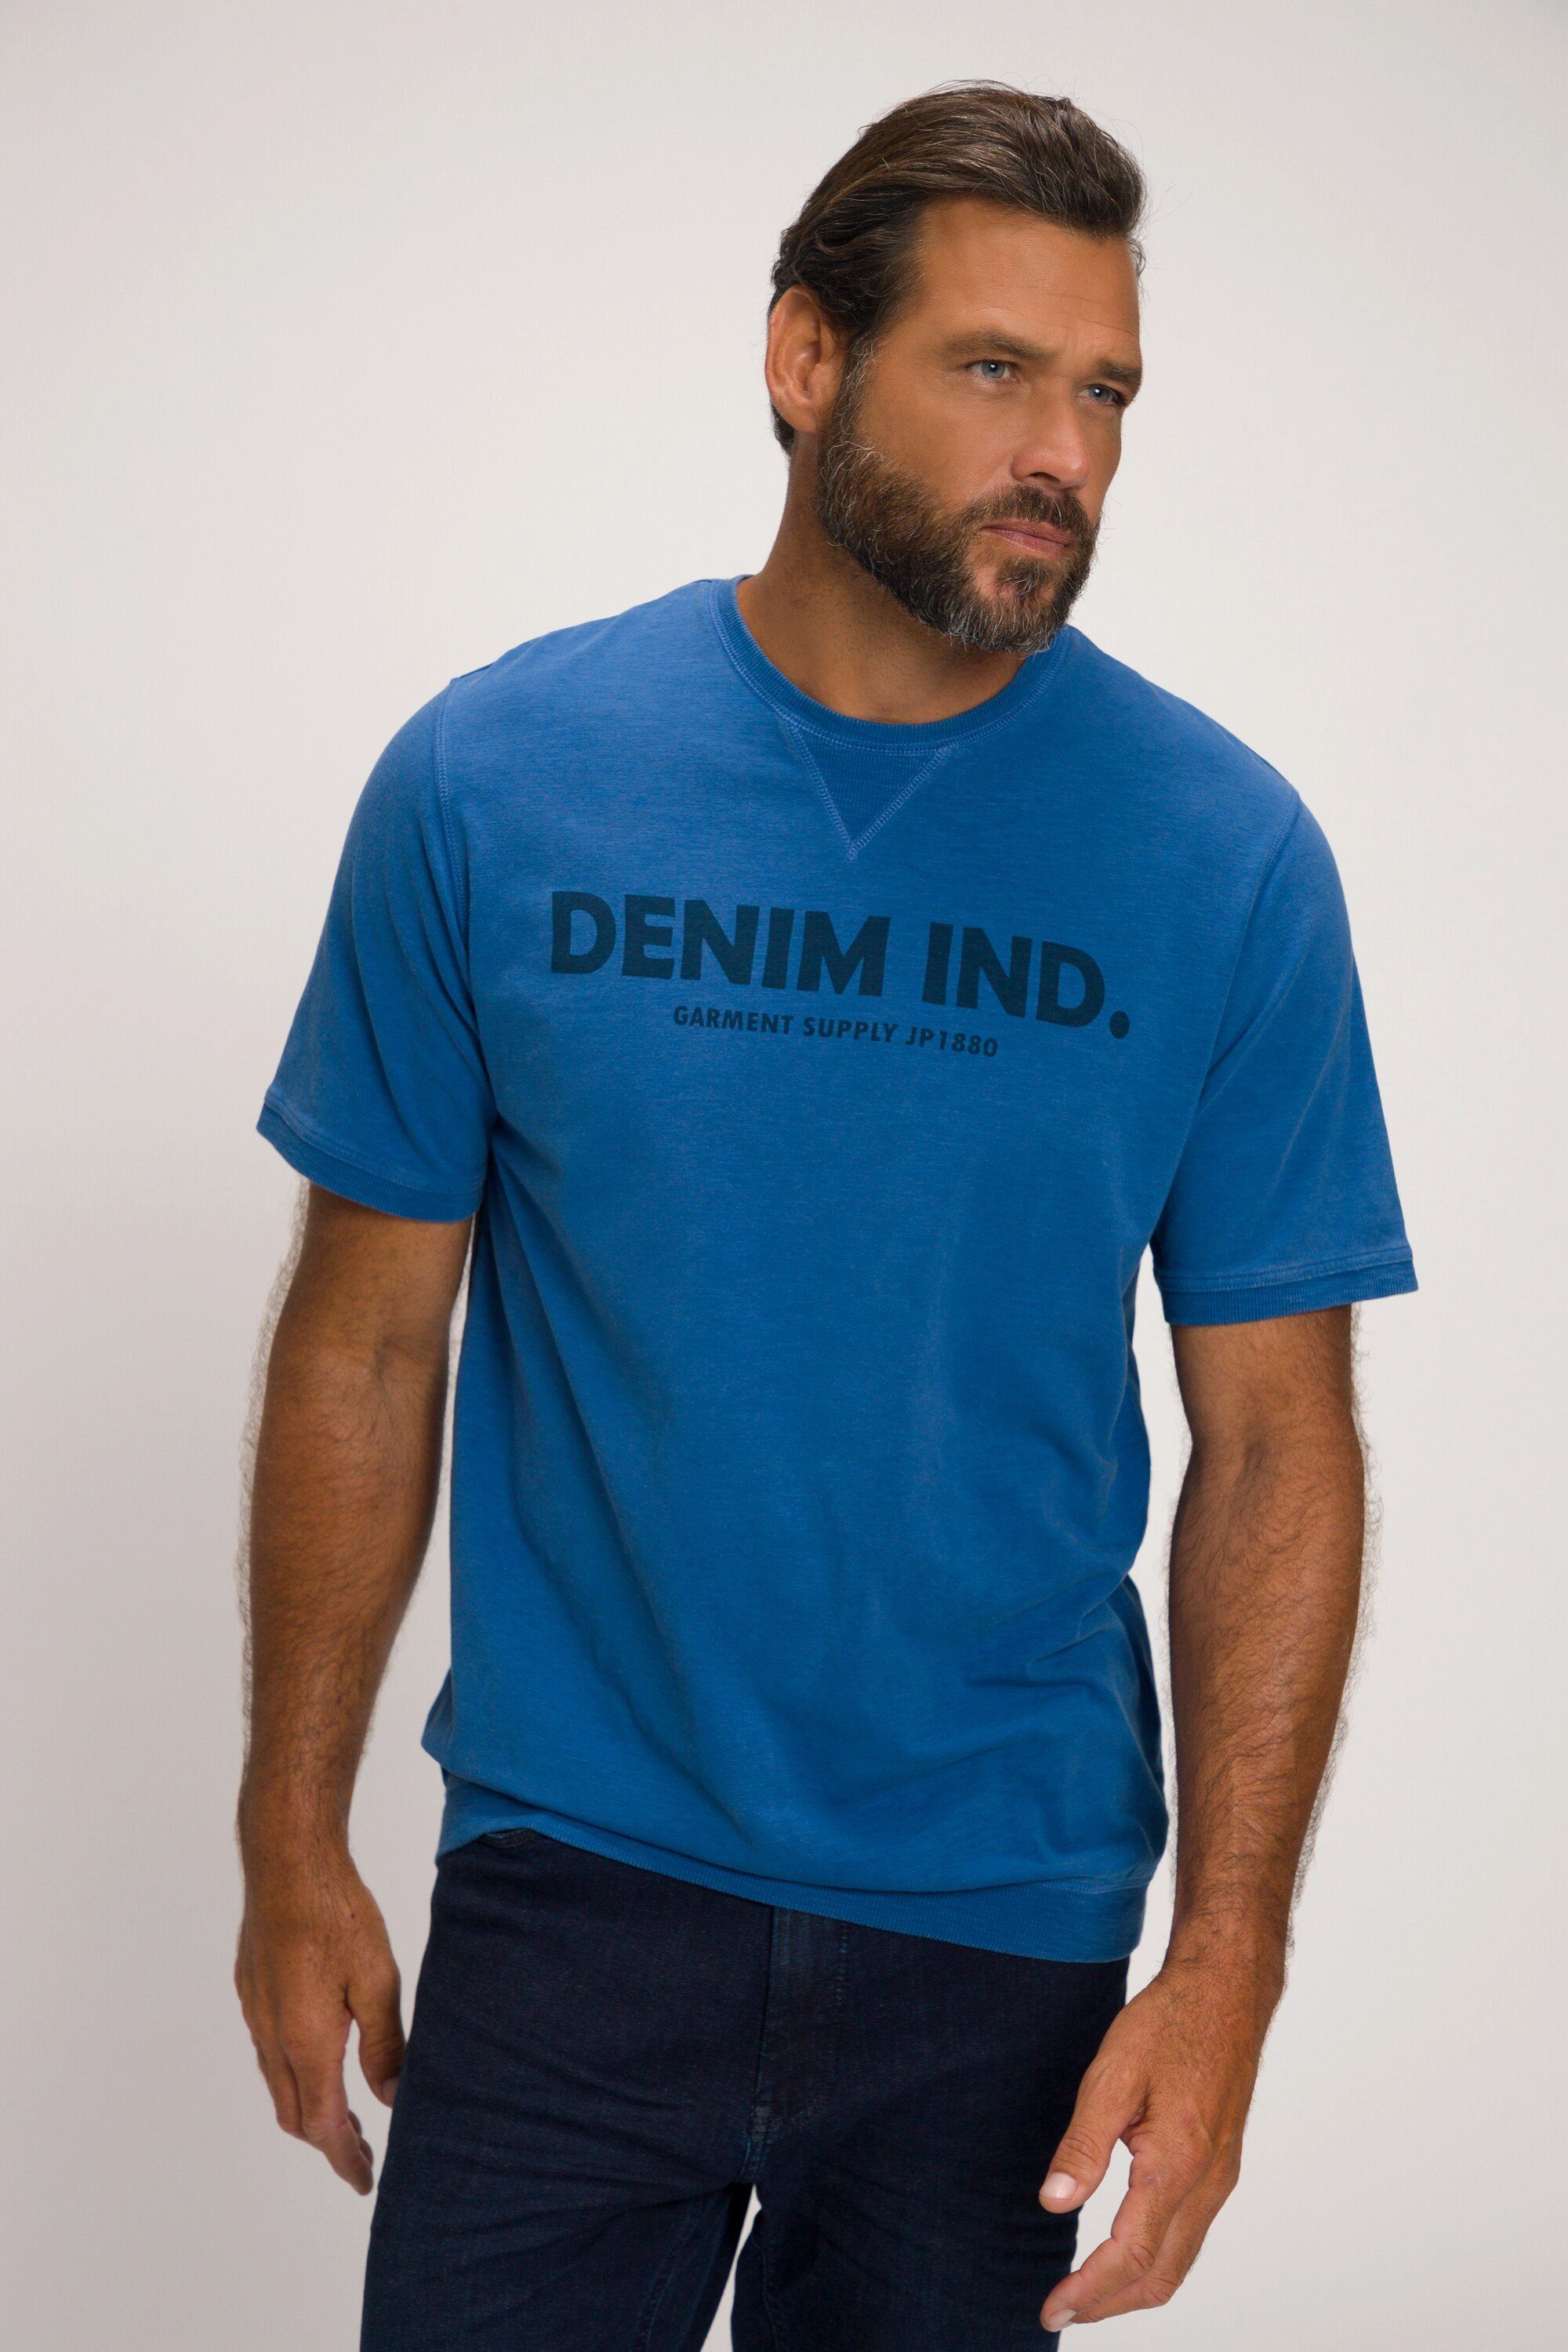 JP1880 T-Shirt blau Halbarm Bauchfit T-Shirt bis 8XL Flammjersey